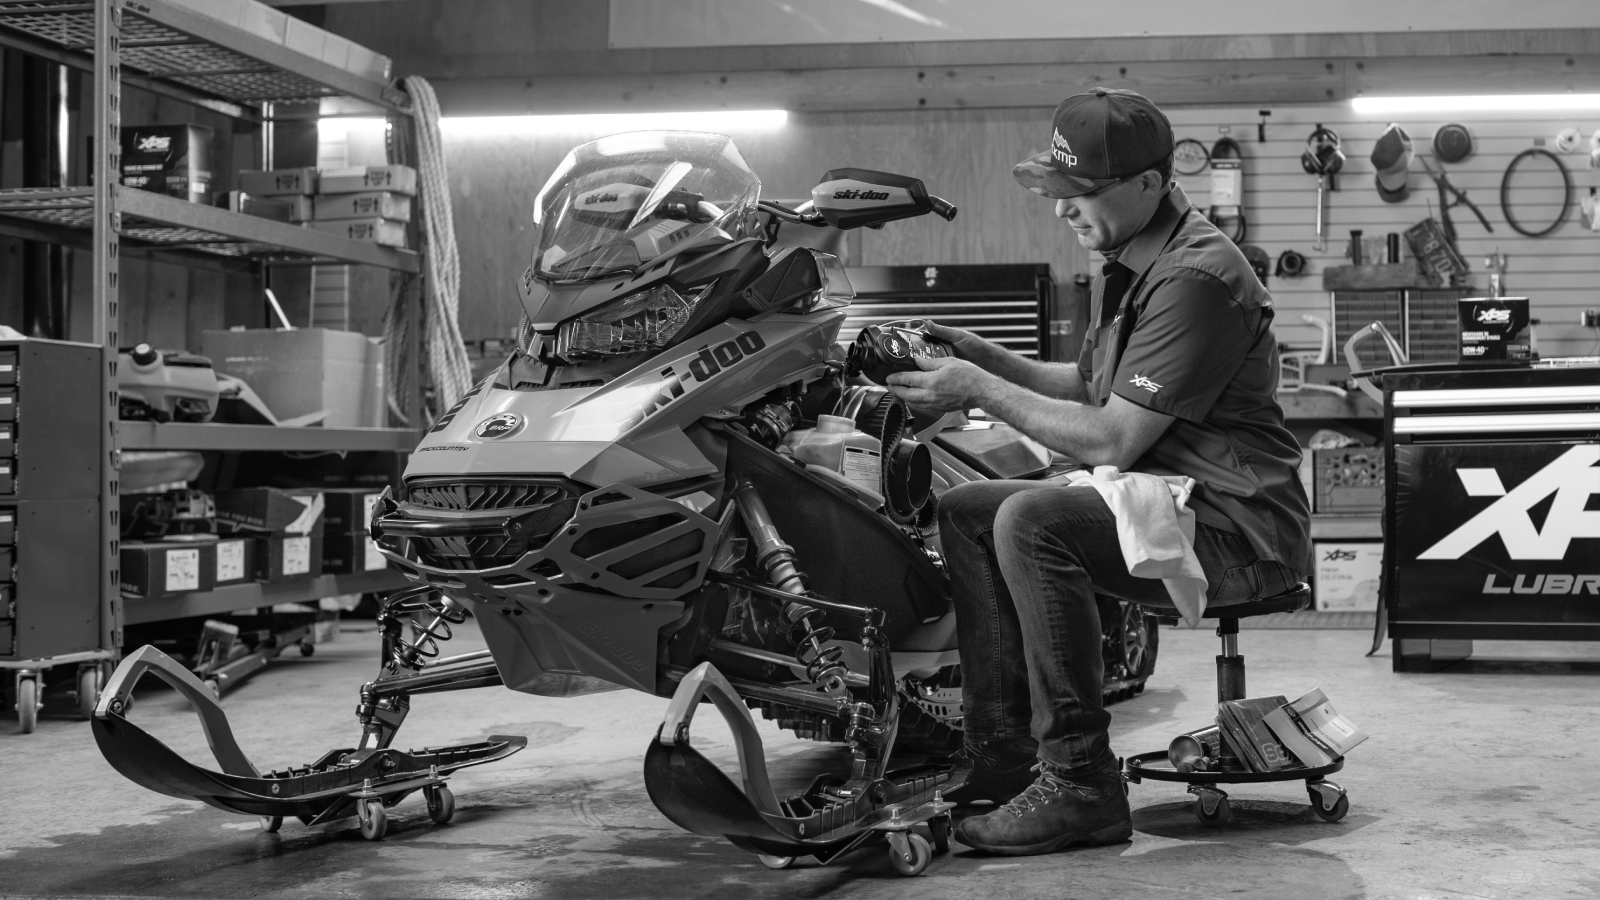 Rider performing maintenance on his Ski-Doo snowmobile